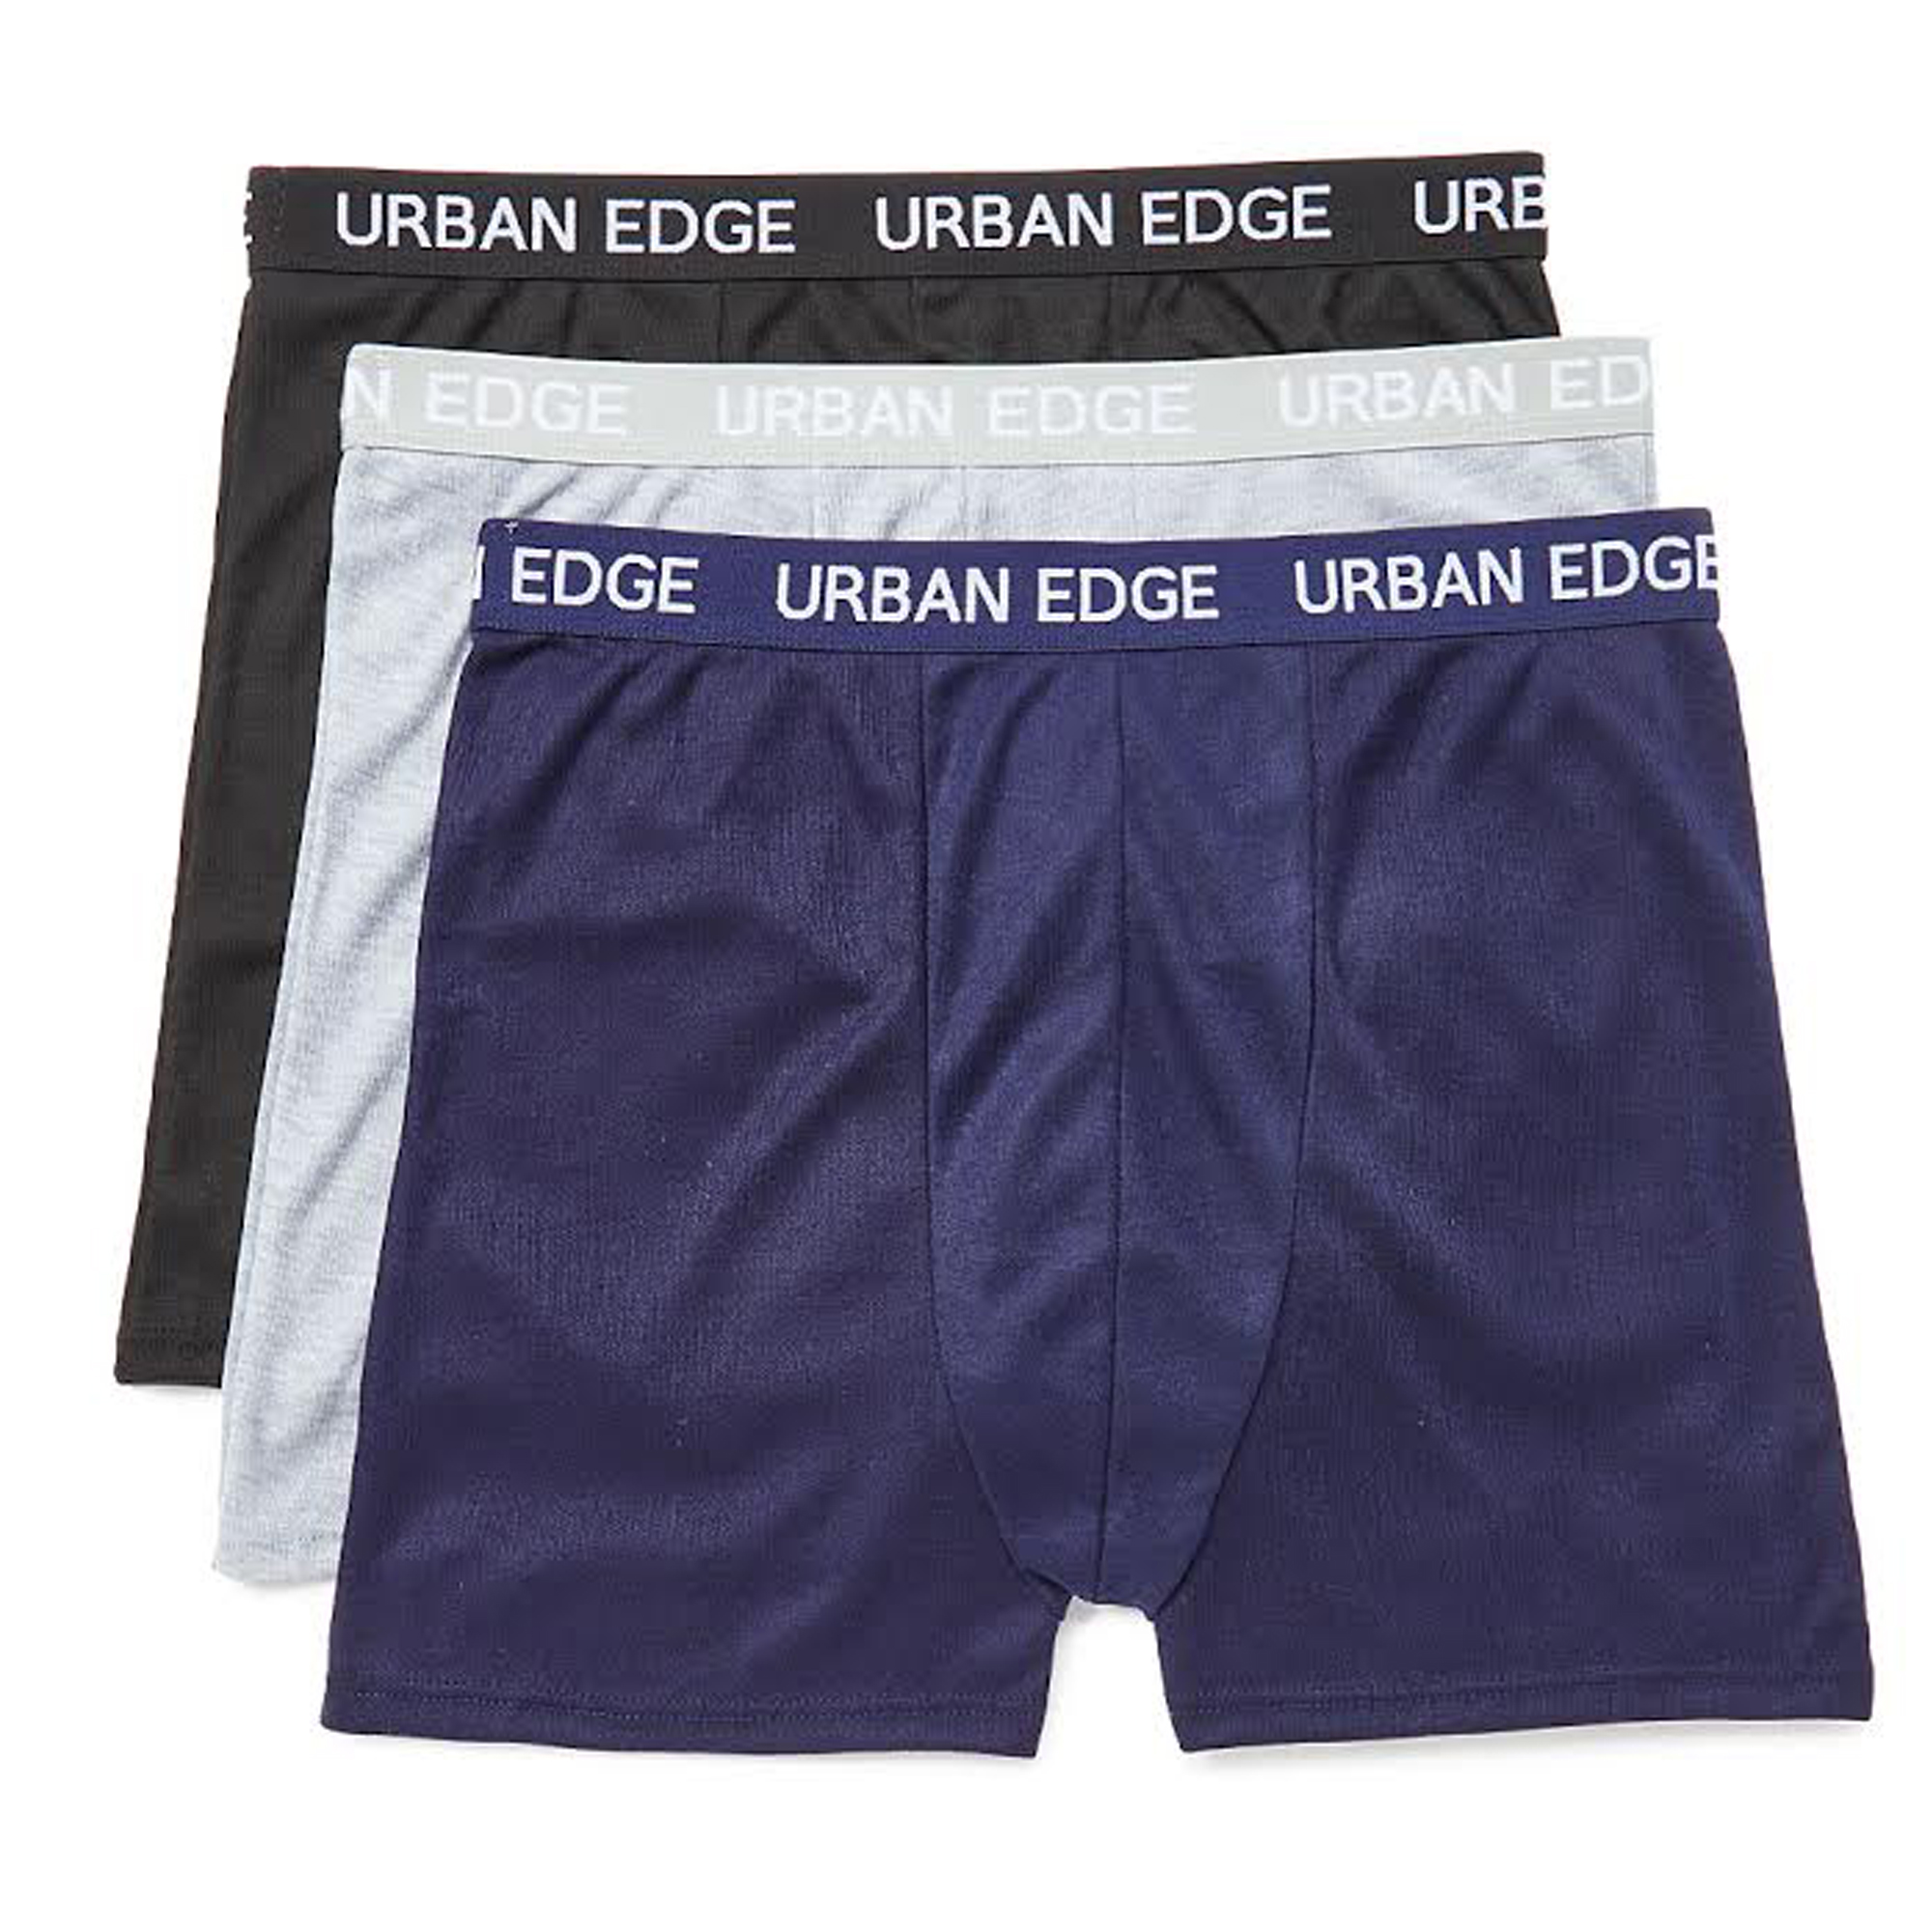 Men's Solid Colored Urban Edge Boxer Briefs - Sizes Medium-2XL - 3 Pack